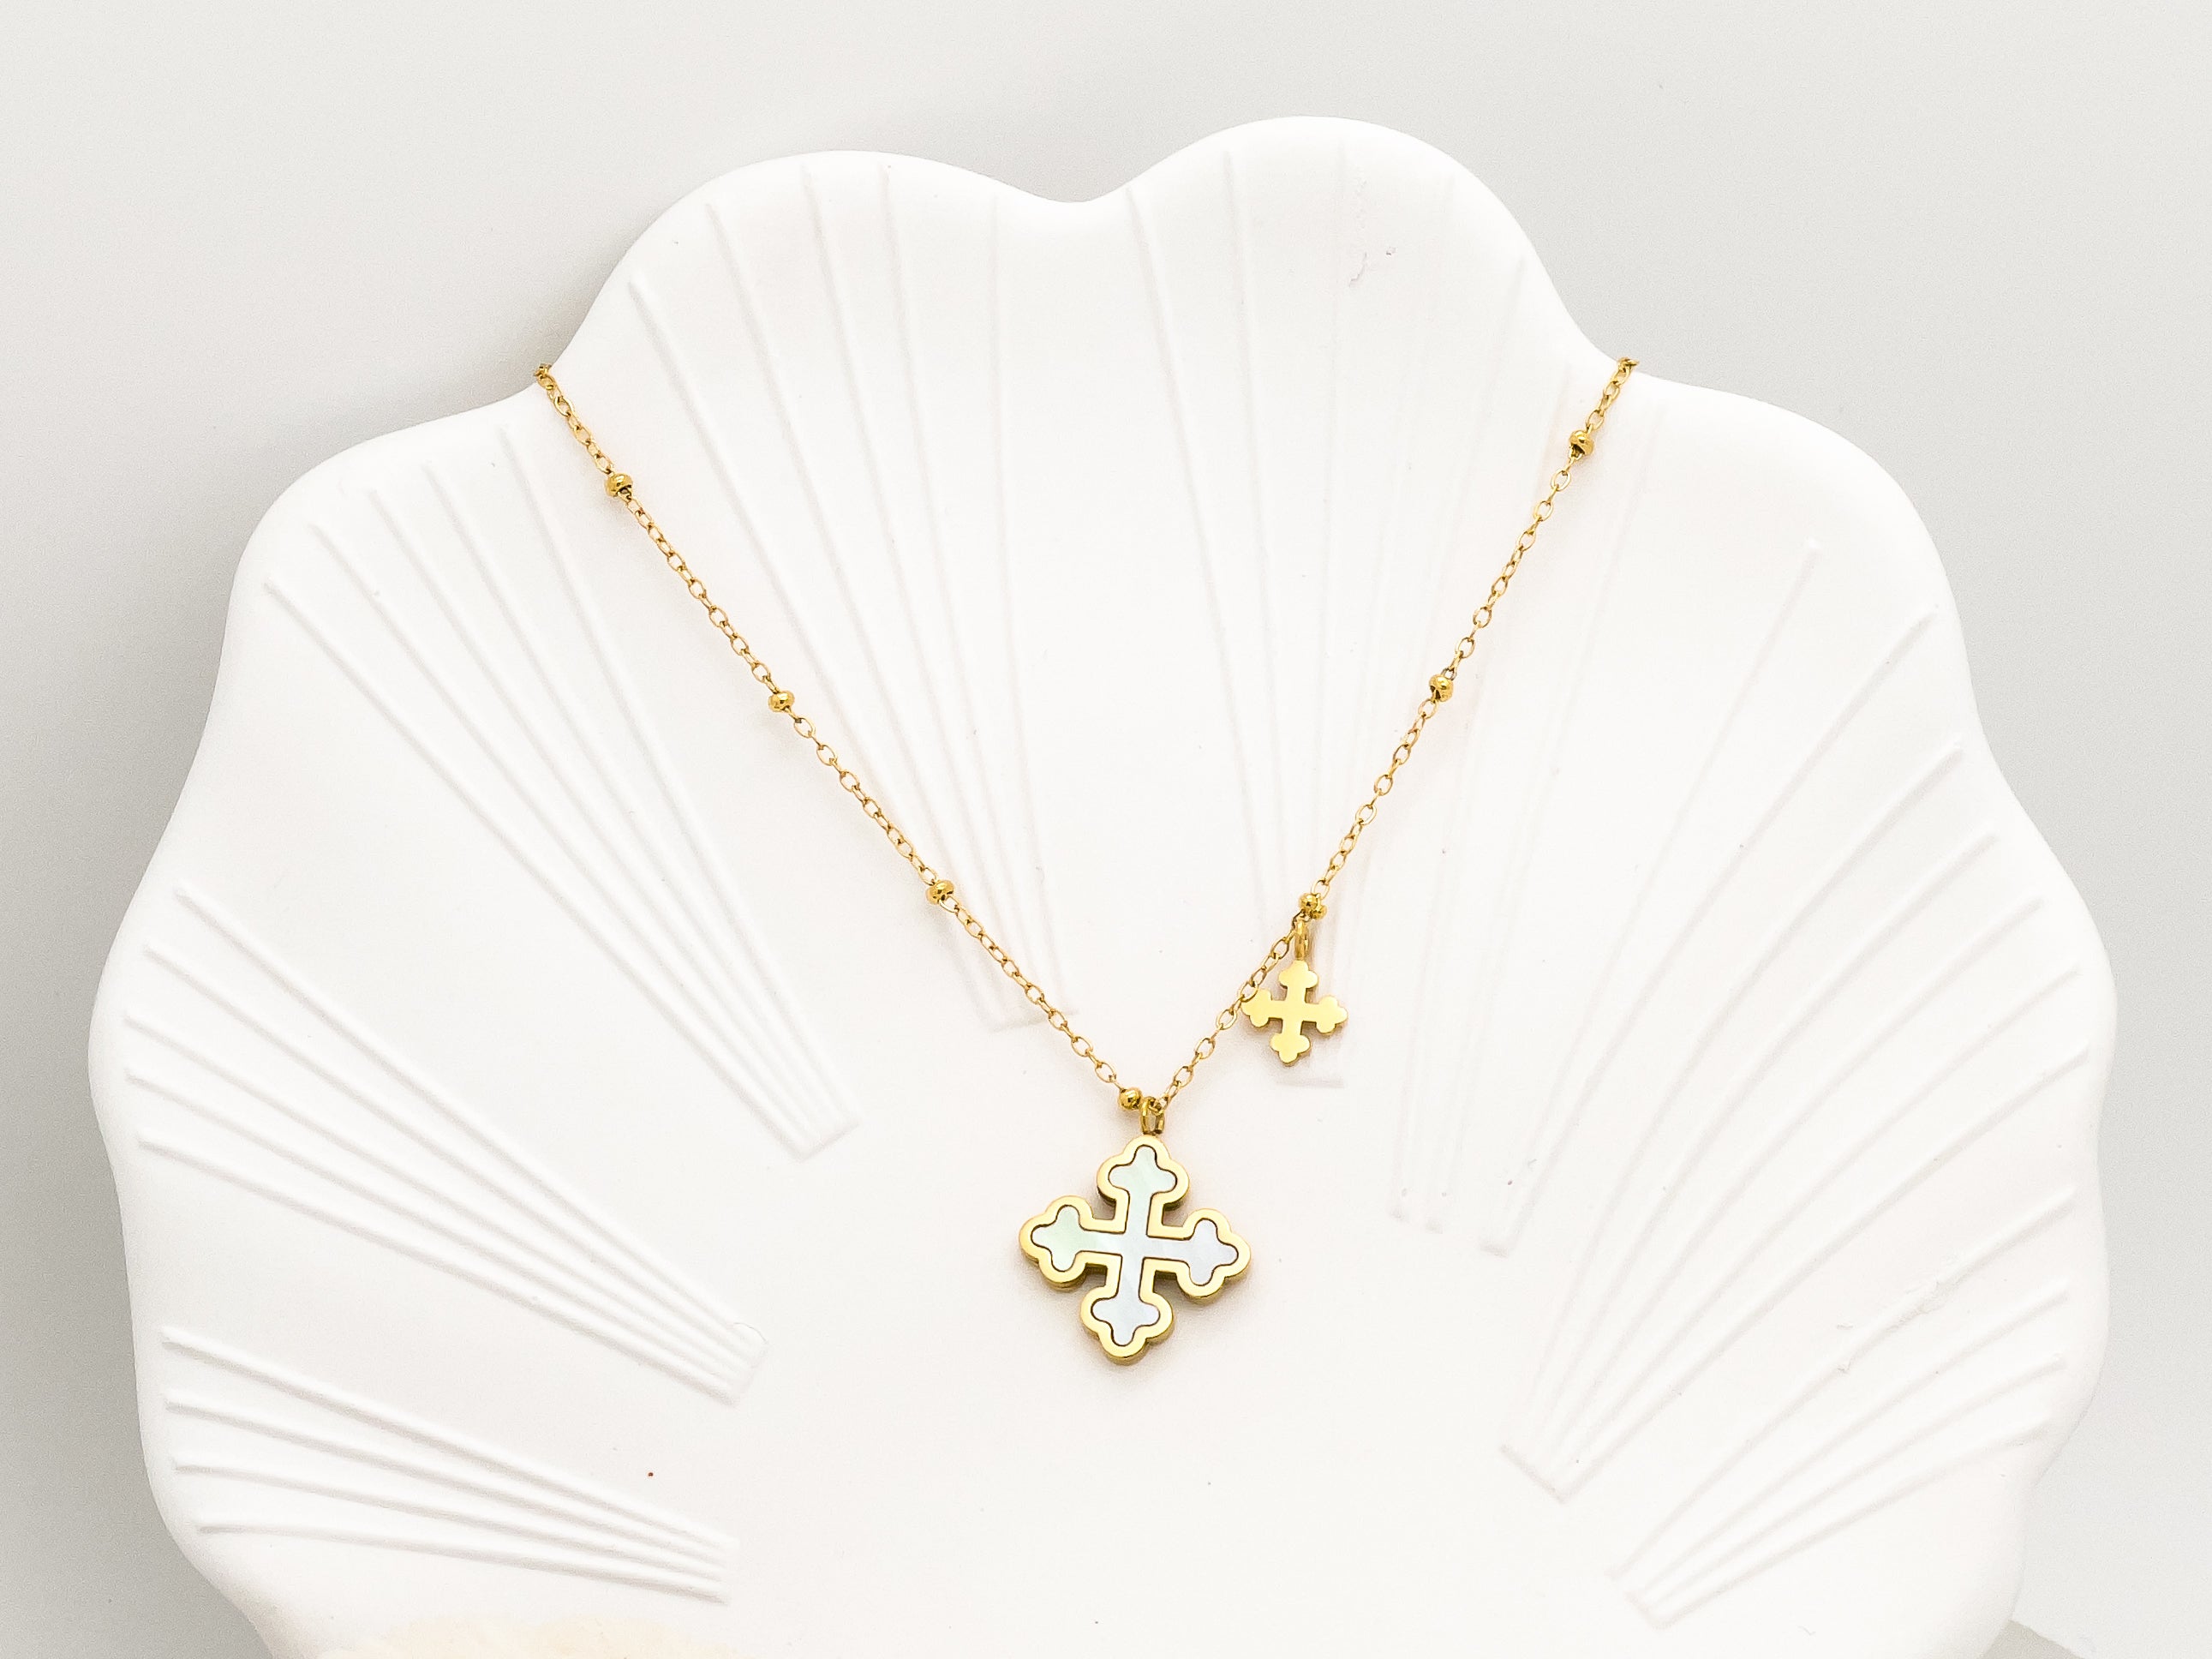 Merlot Shell Cross Pendant Necklace - Jewelry Store | Chic Chic Bon